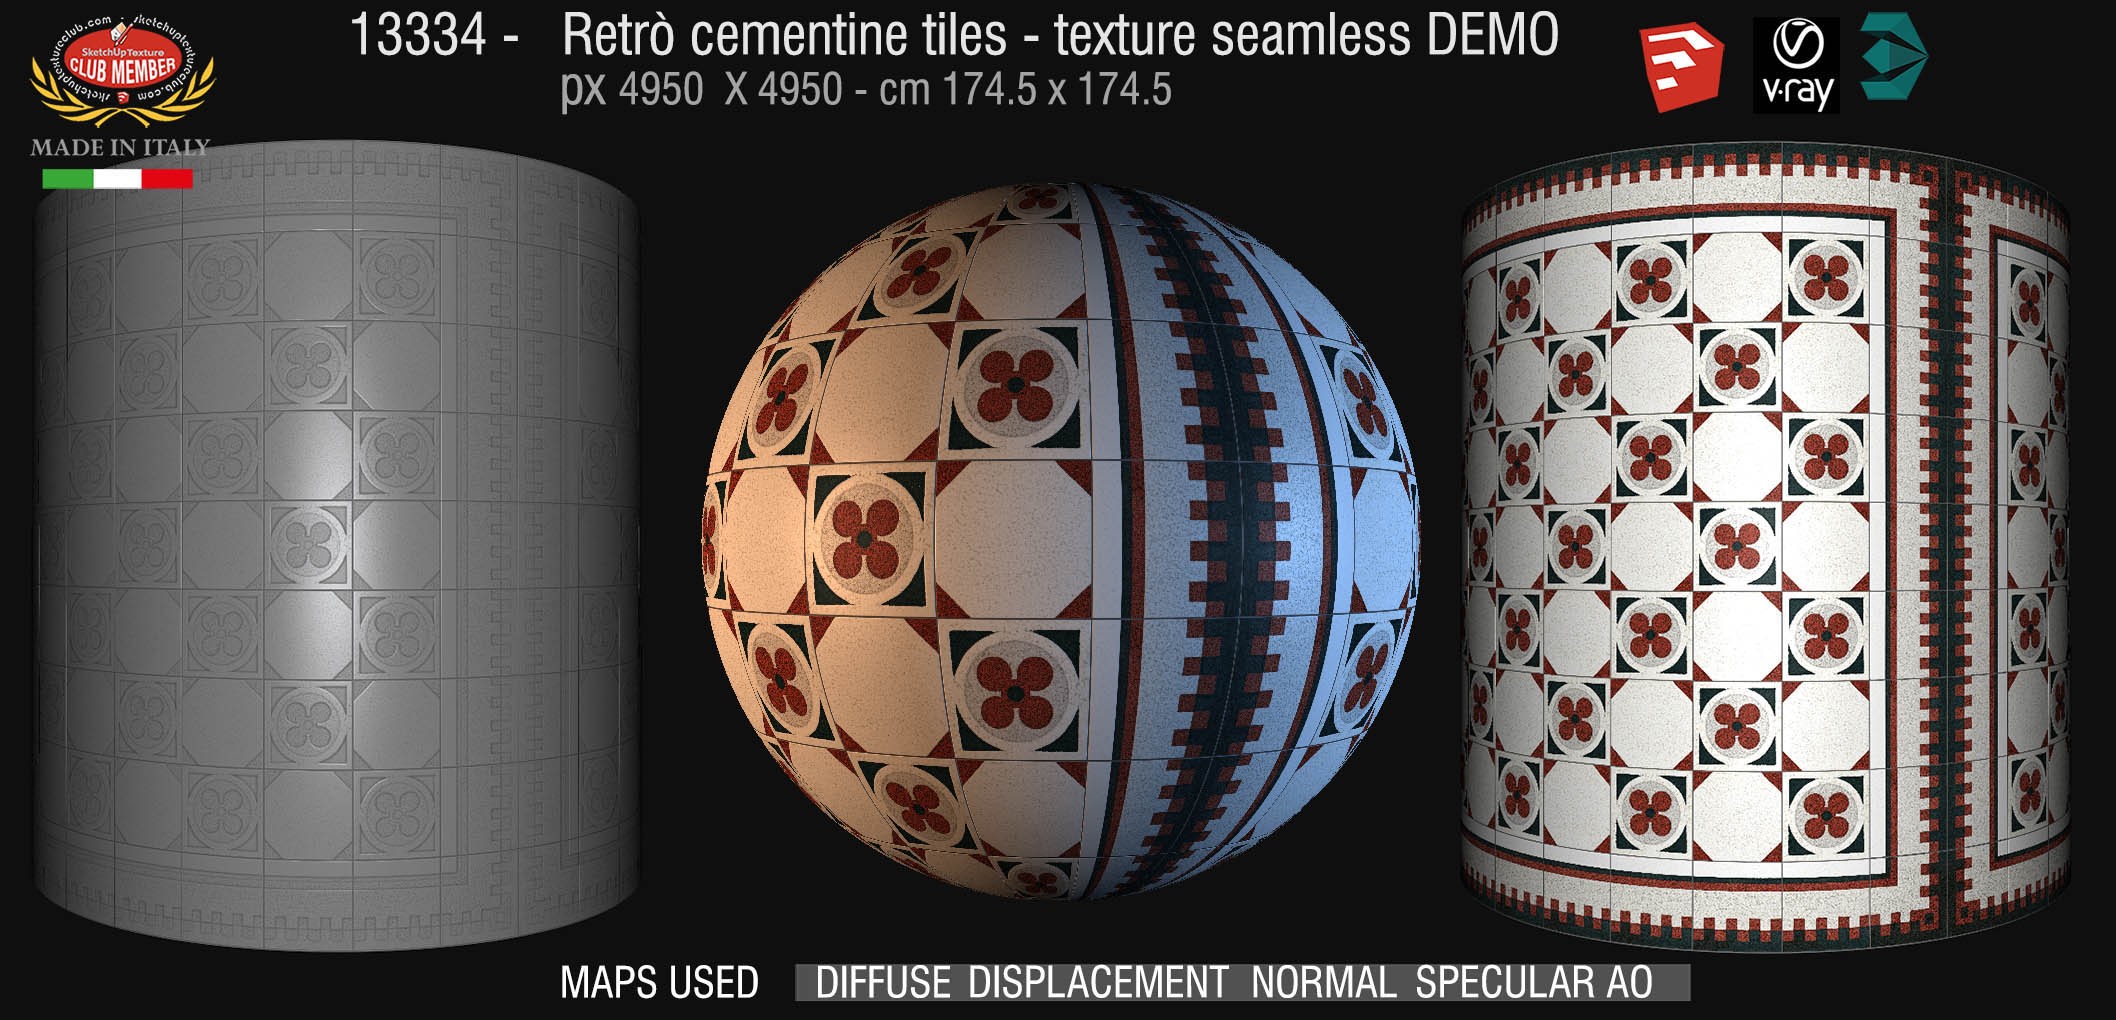 13334 retrò cementine tiles - texture seamless + maps DEMO